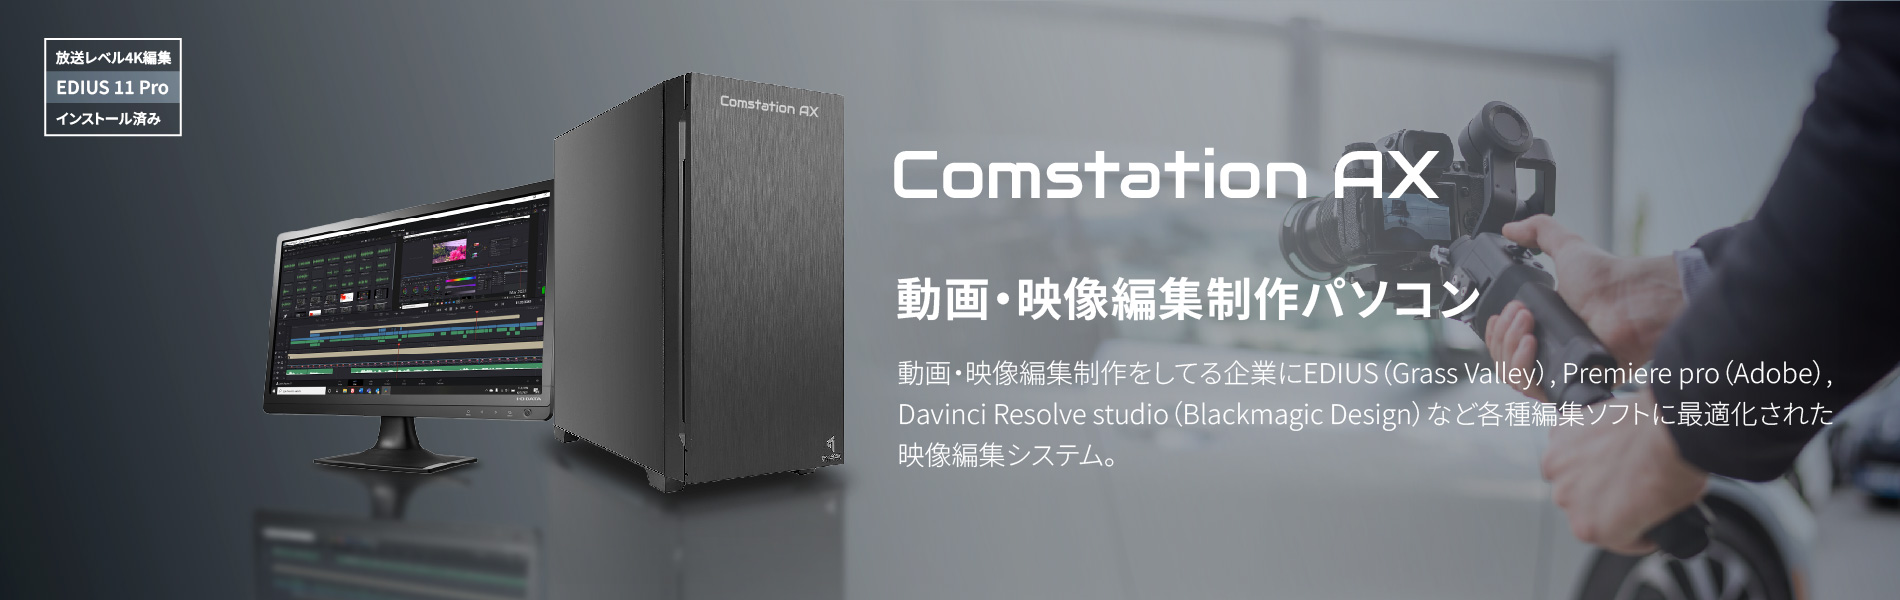 comstation-ax